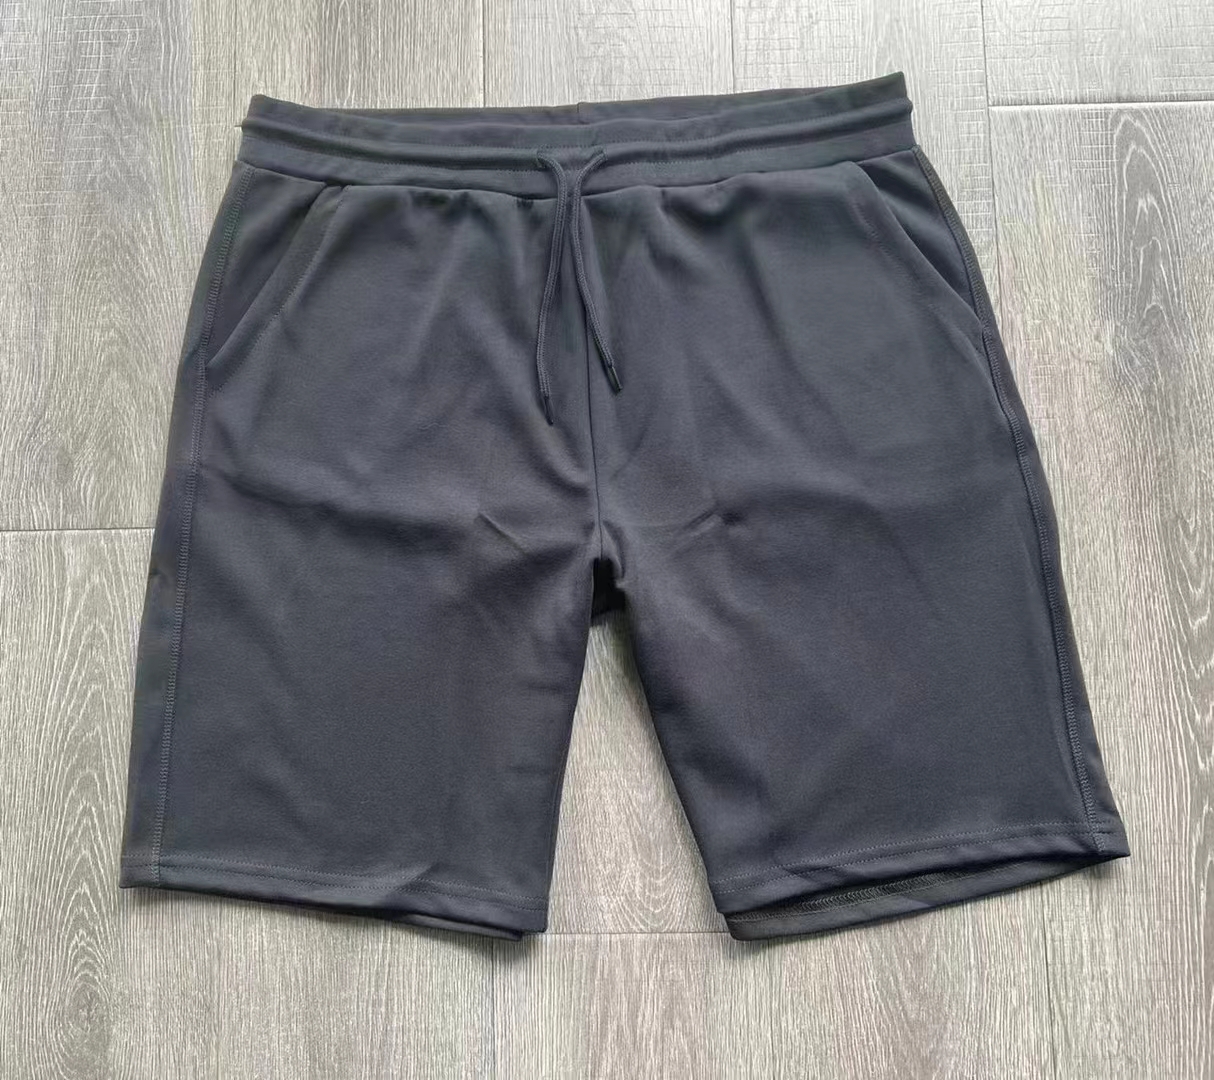 Stockpapa Overrun Branded Apparel 32°, Men\'s Spandex Knit Shorts